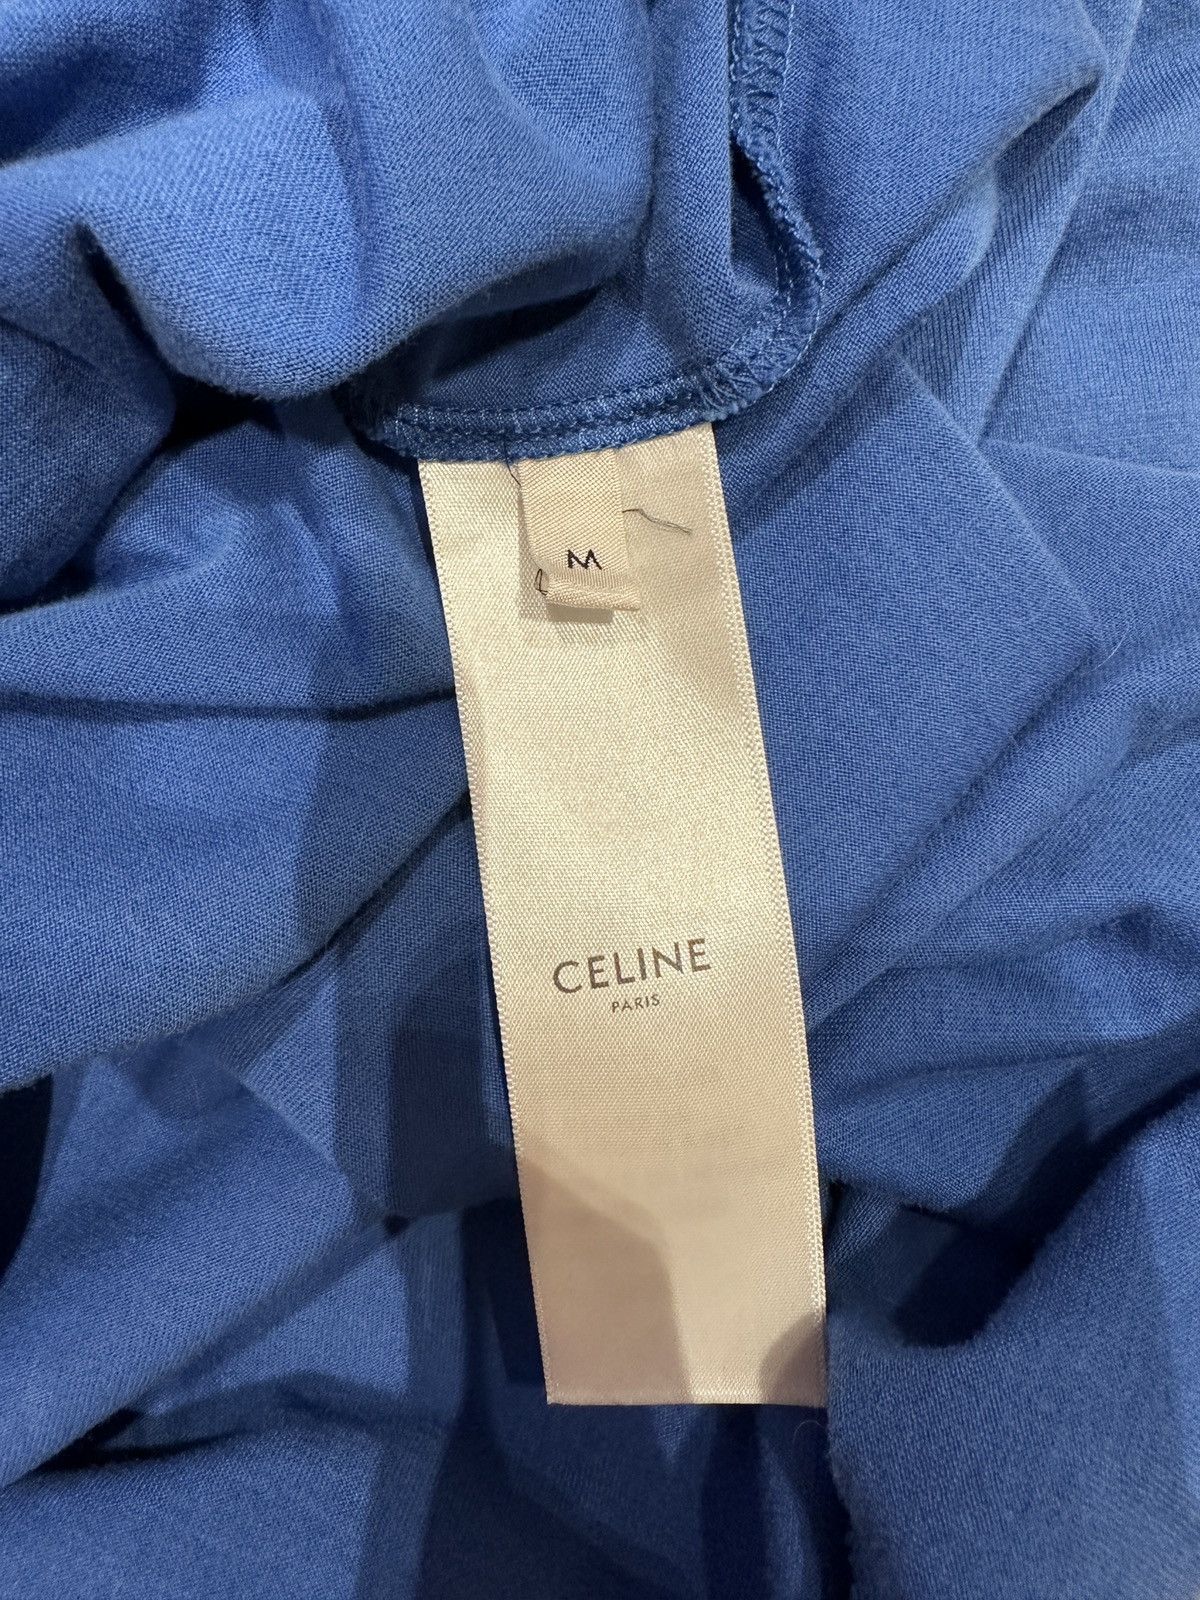 Celine Celine by Hedi Slimane Blue logo t shirt tee size M Size US M / EU 48-50 / 2 - 8 Thumbnail